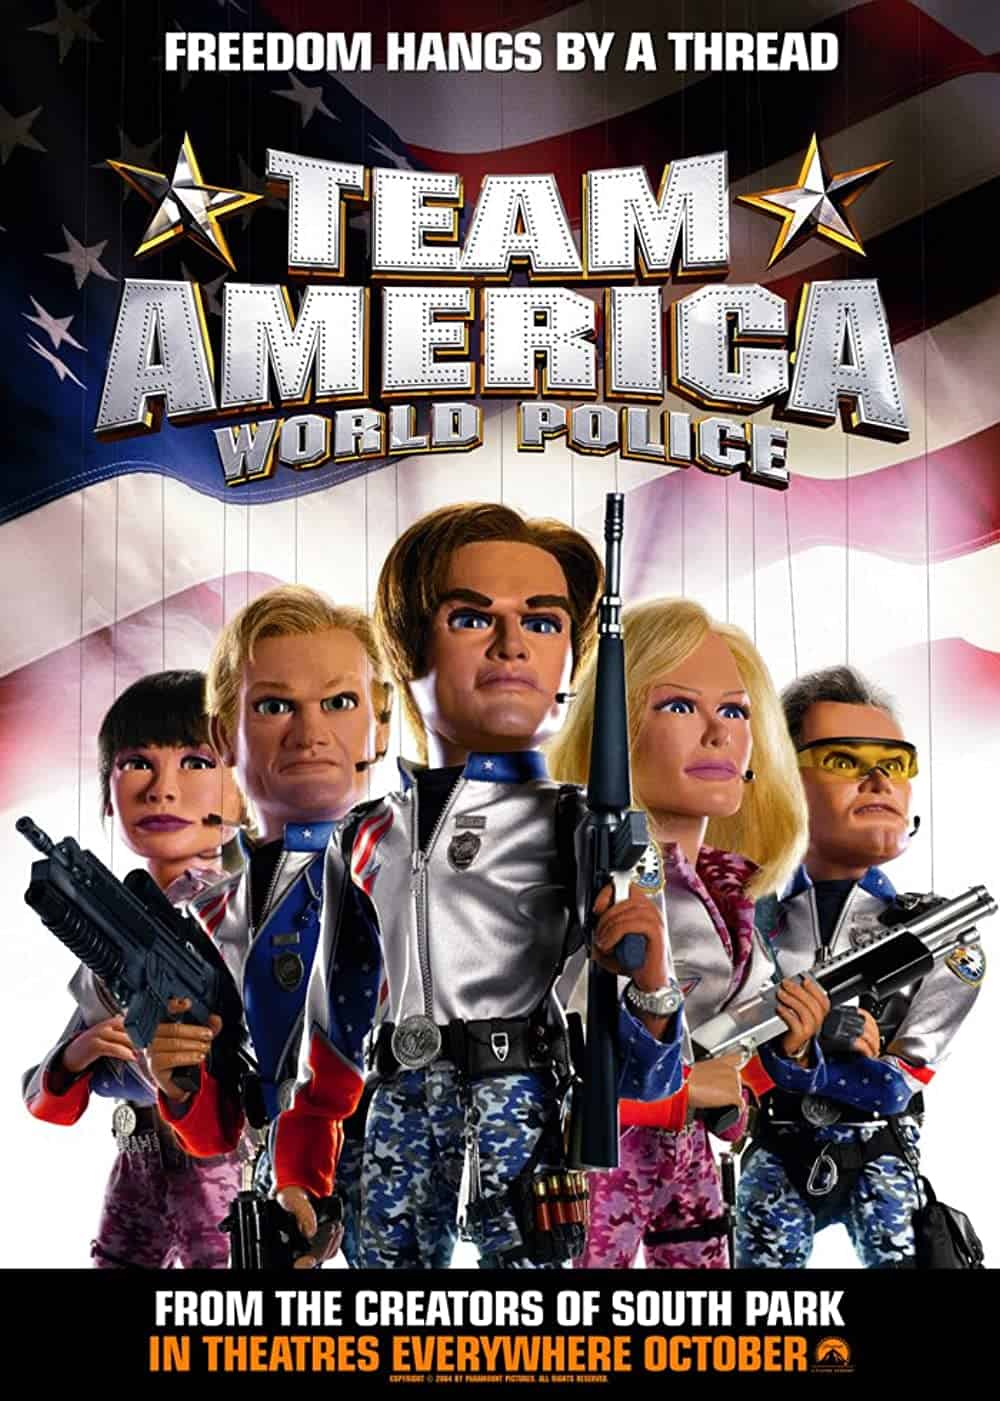 Team America World Police (2004)